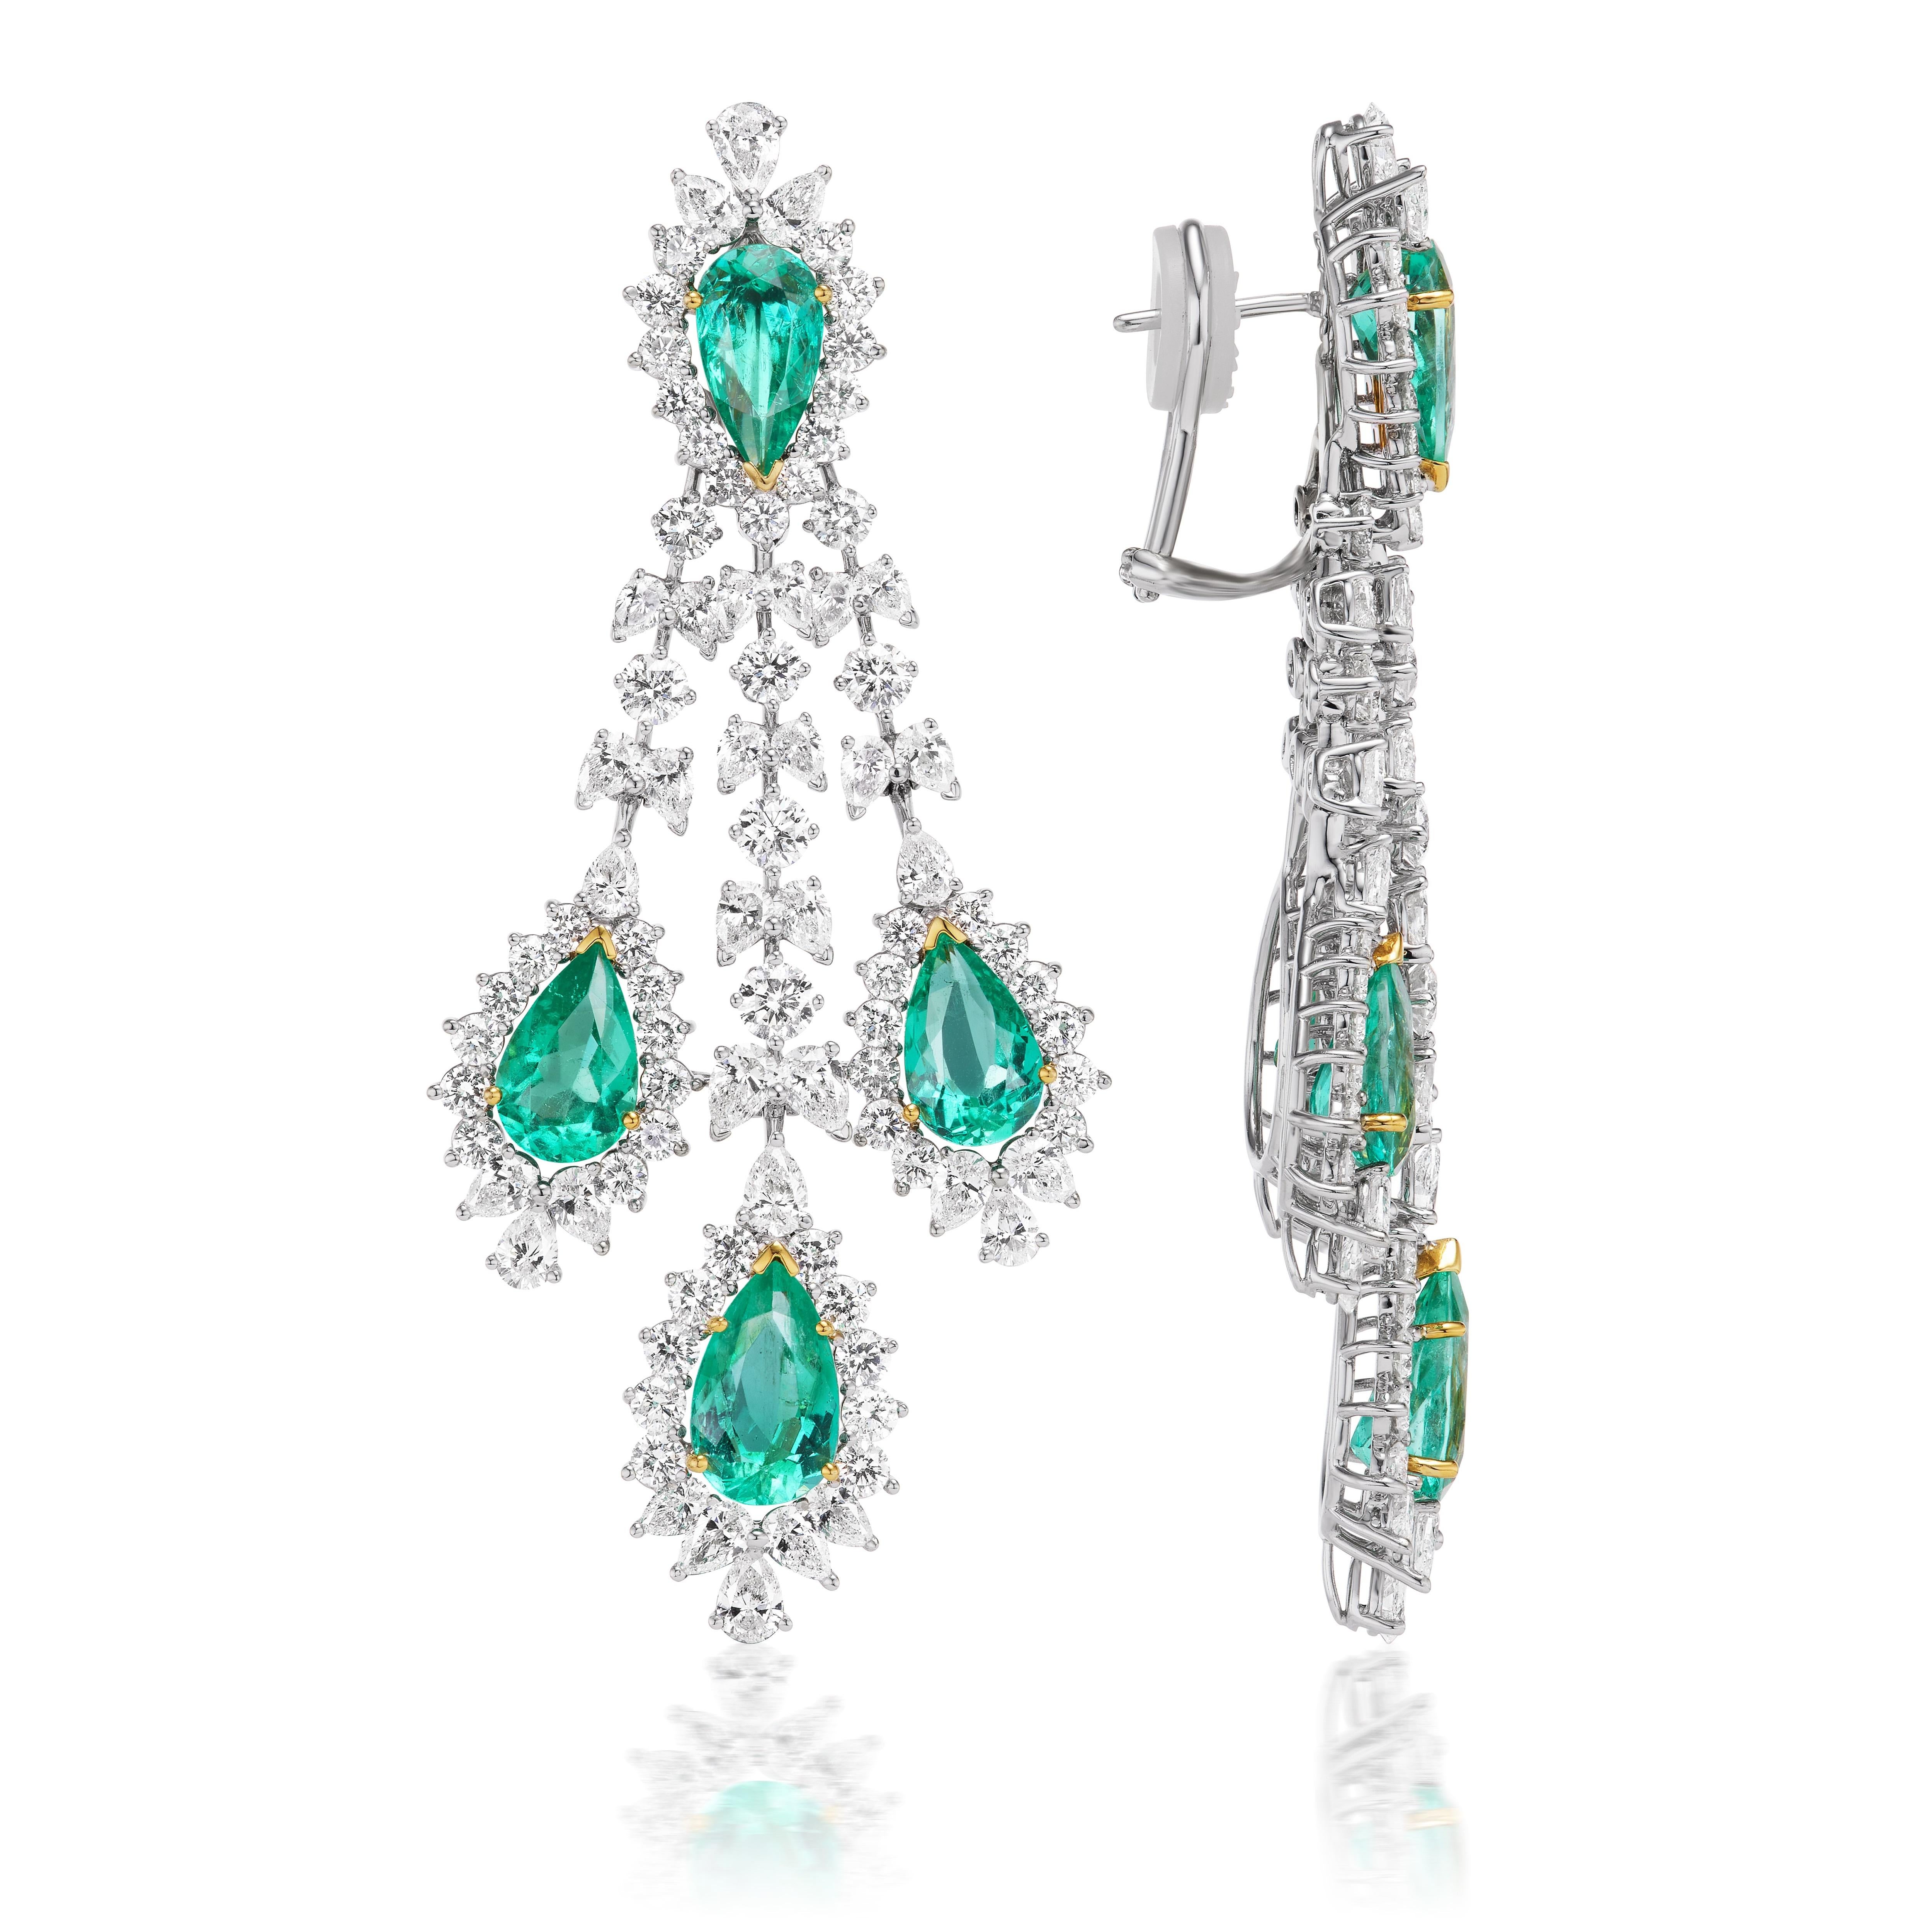 Mixed Cut Van Necklace & Earrings Suite (220.66 ct Colombian Emeralds & Diamonds) in 18K For Sale